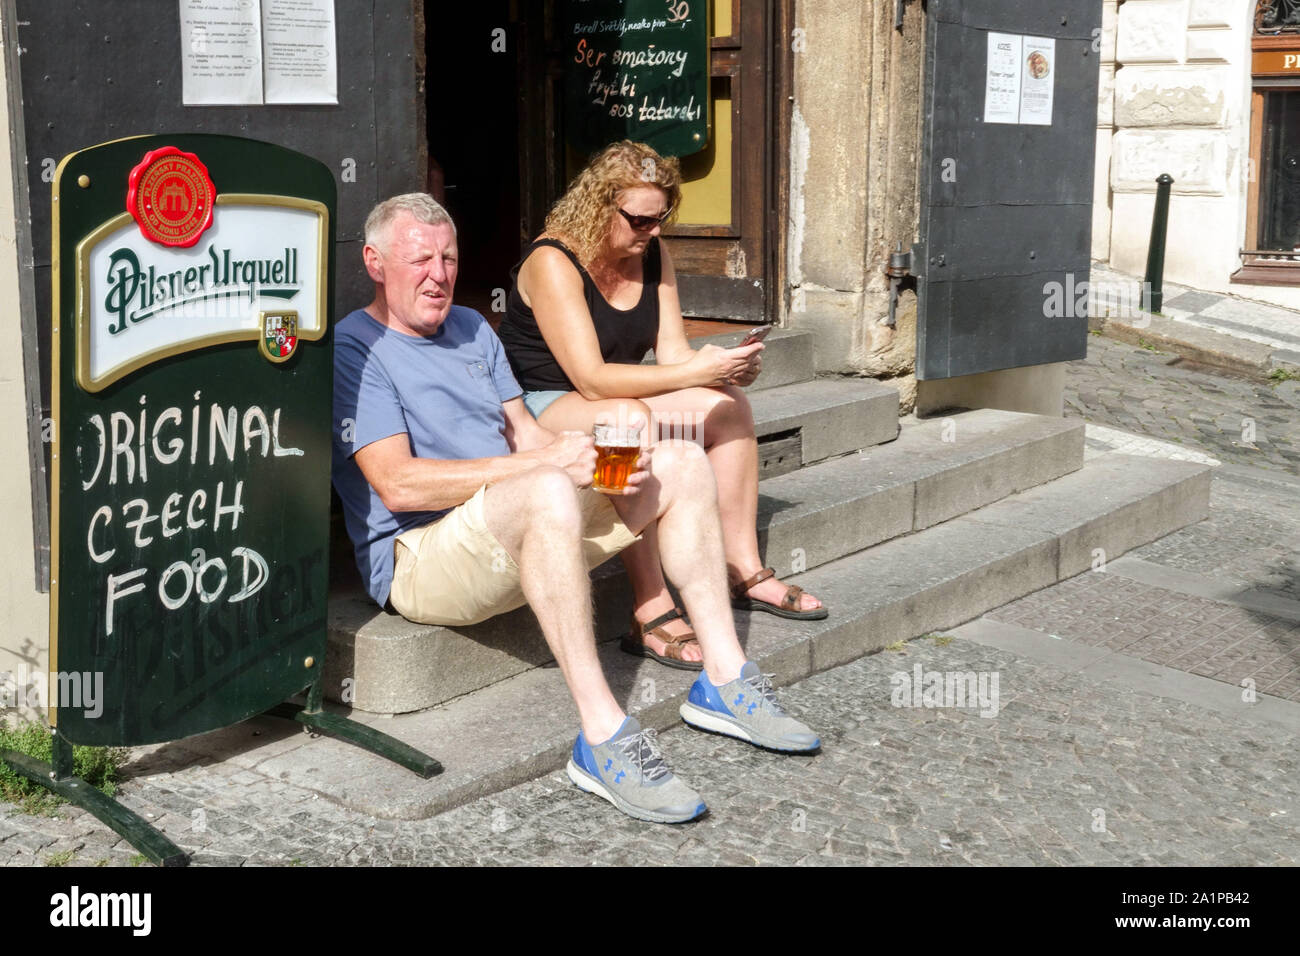 Turisti di Praga bere birra fuori bar U Kocoura in estate calda, Praga Mala Strana Praga Turismo Repubblica Ceca Foto Stock